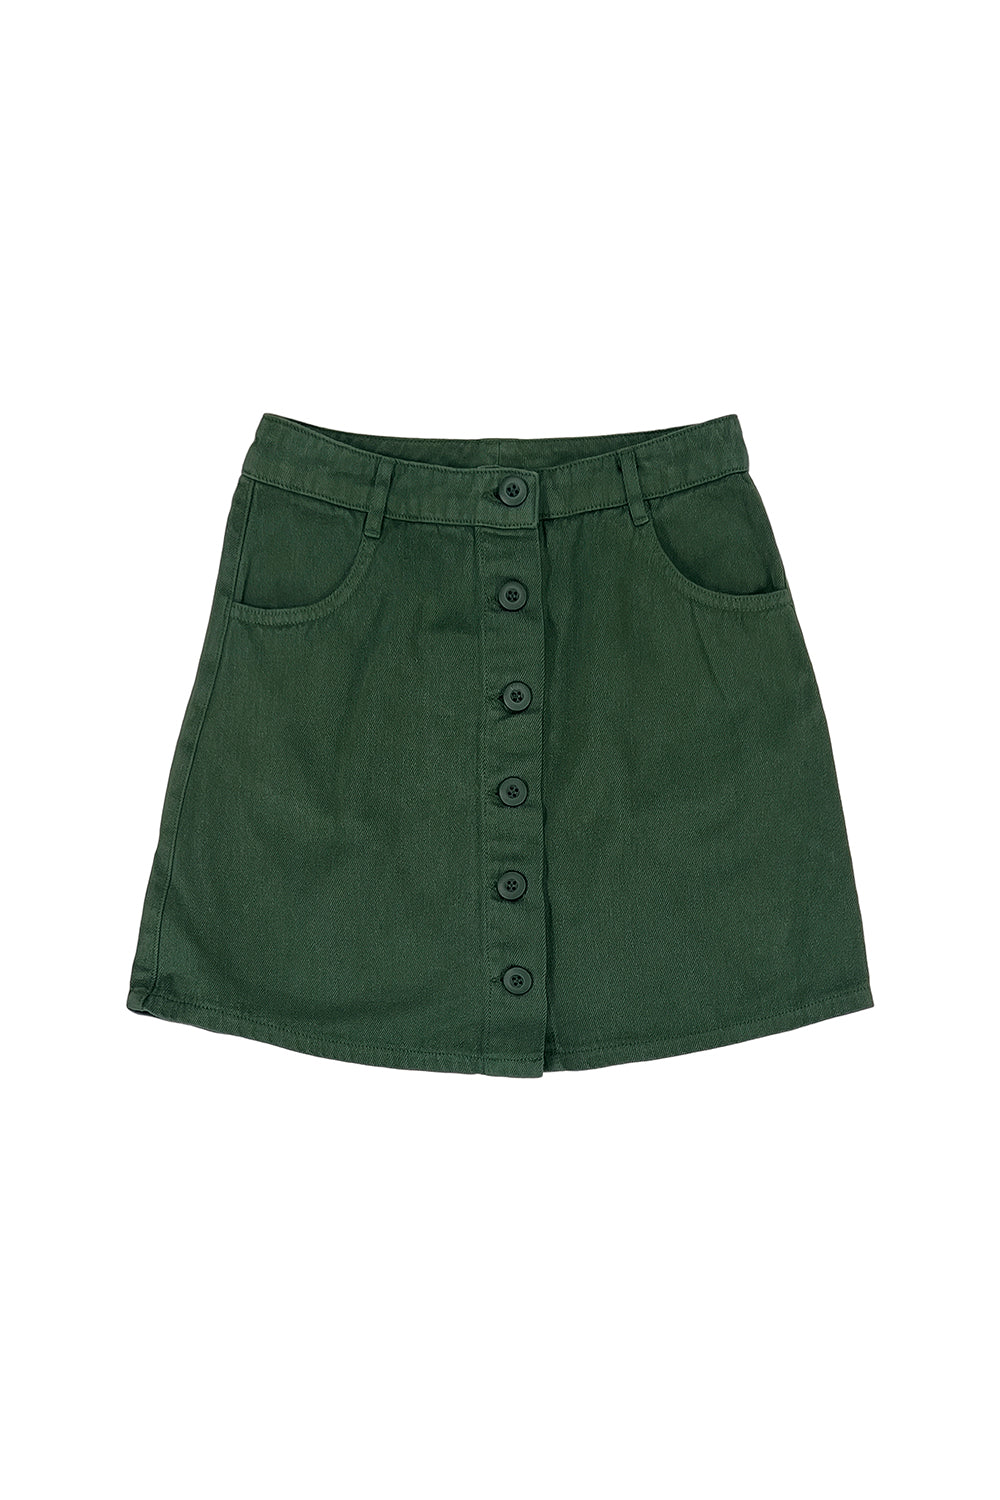 Vassar Skirt | Jungmaven Hemp Clothing & Accessories / Color: Hunter Green